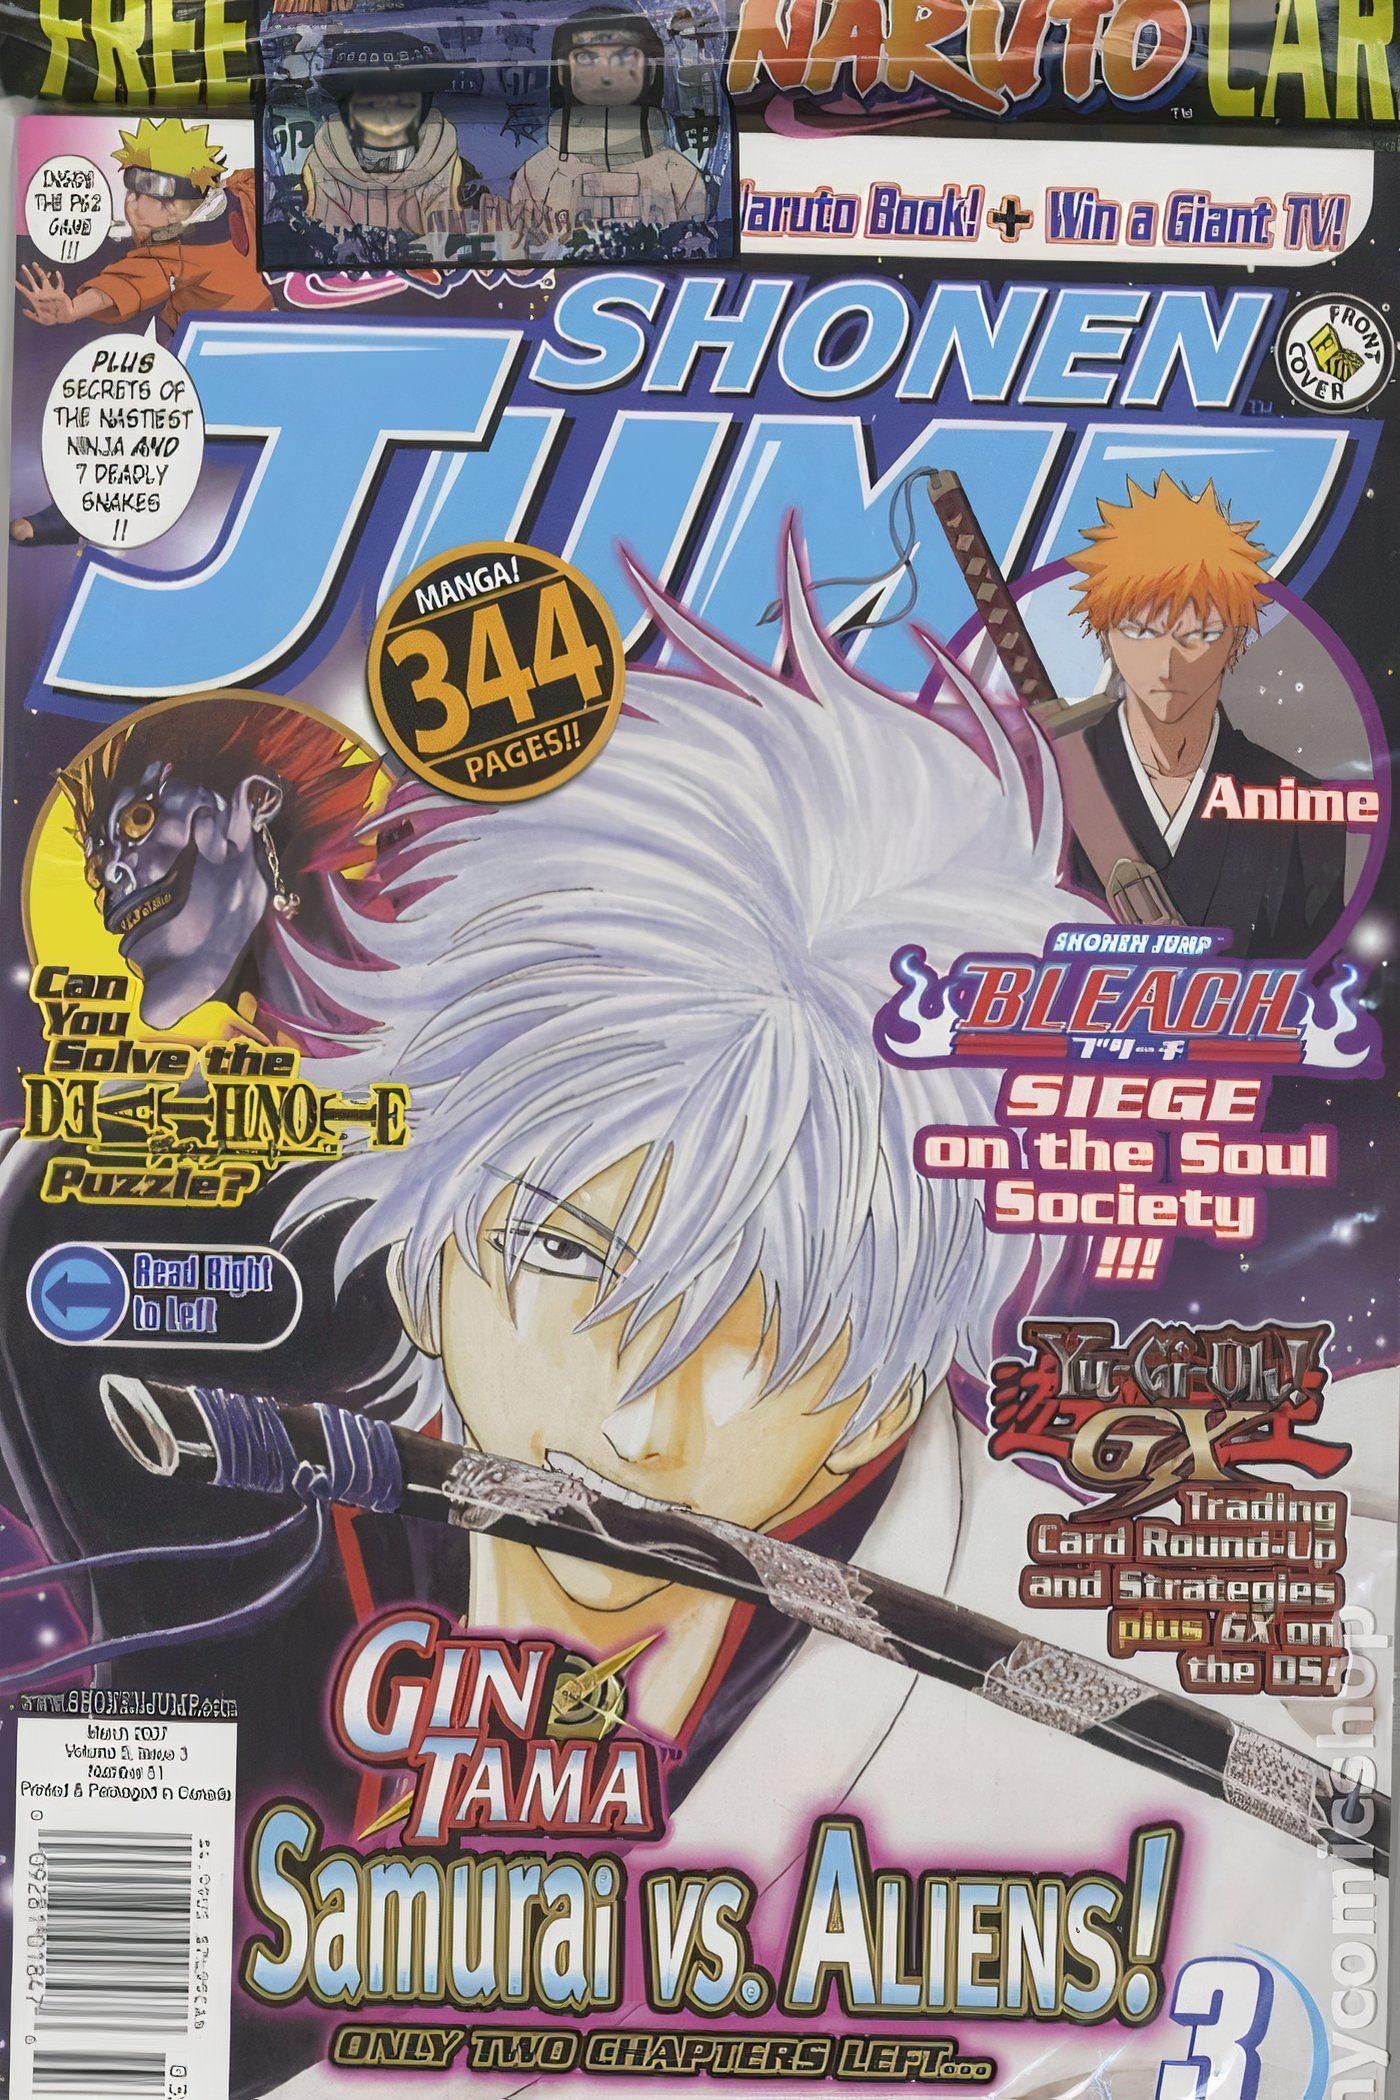 American Weekly Shonen Jump 51 com Gintoki de Gintama 